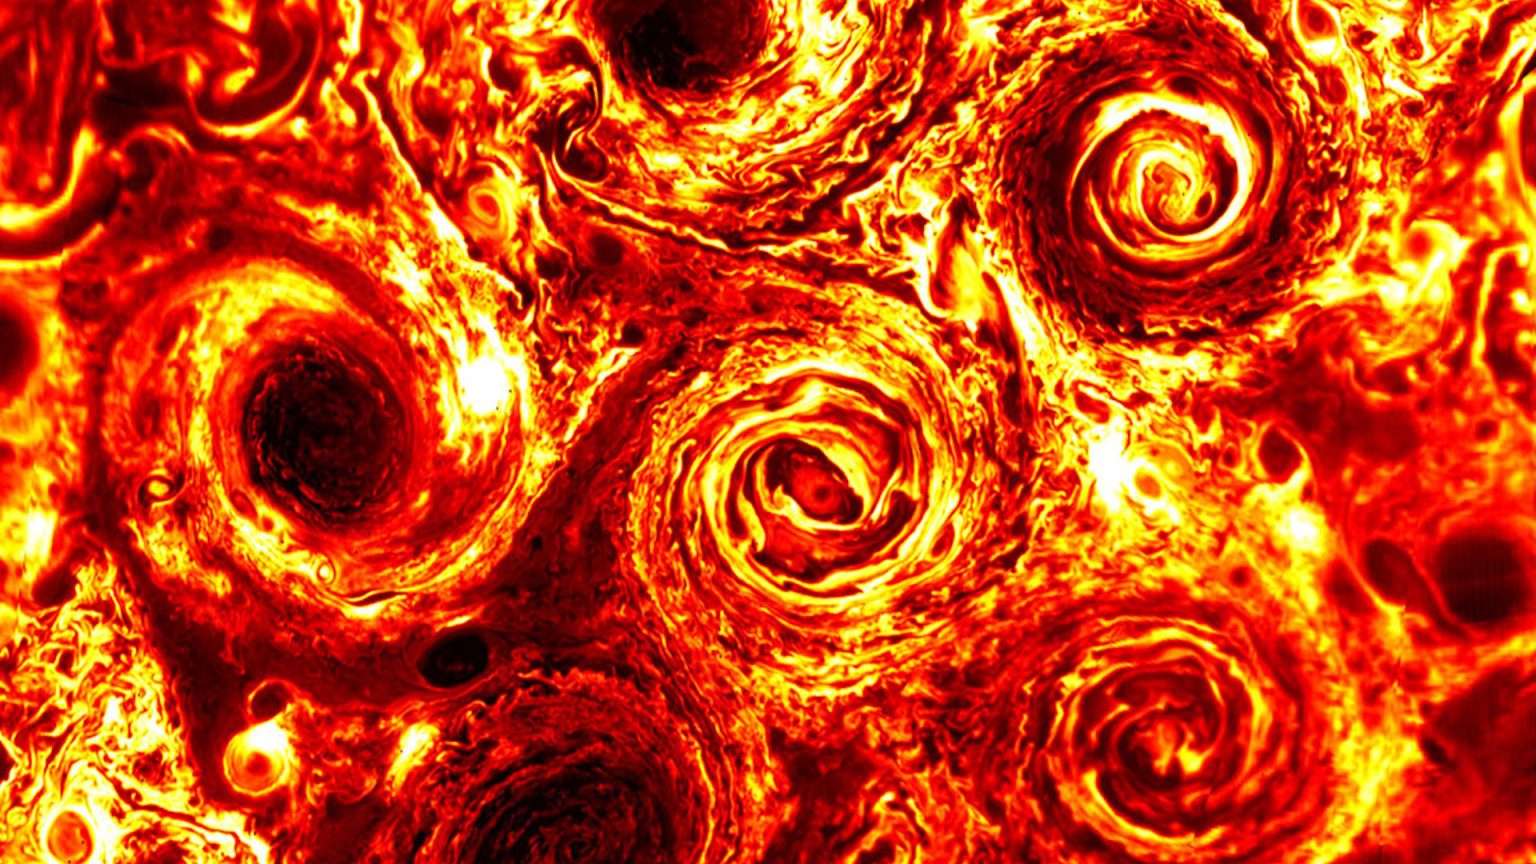 Jupiterove poligonalne oluje pravilnog oblika. Izvor: NASA/JPL-Caltech/SwRI/ASI/INAF/JIRAM .